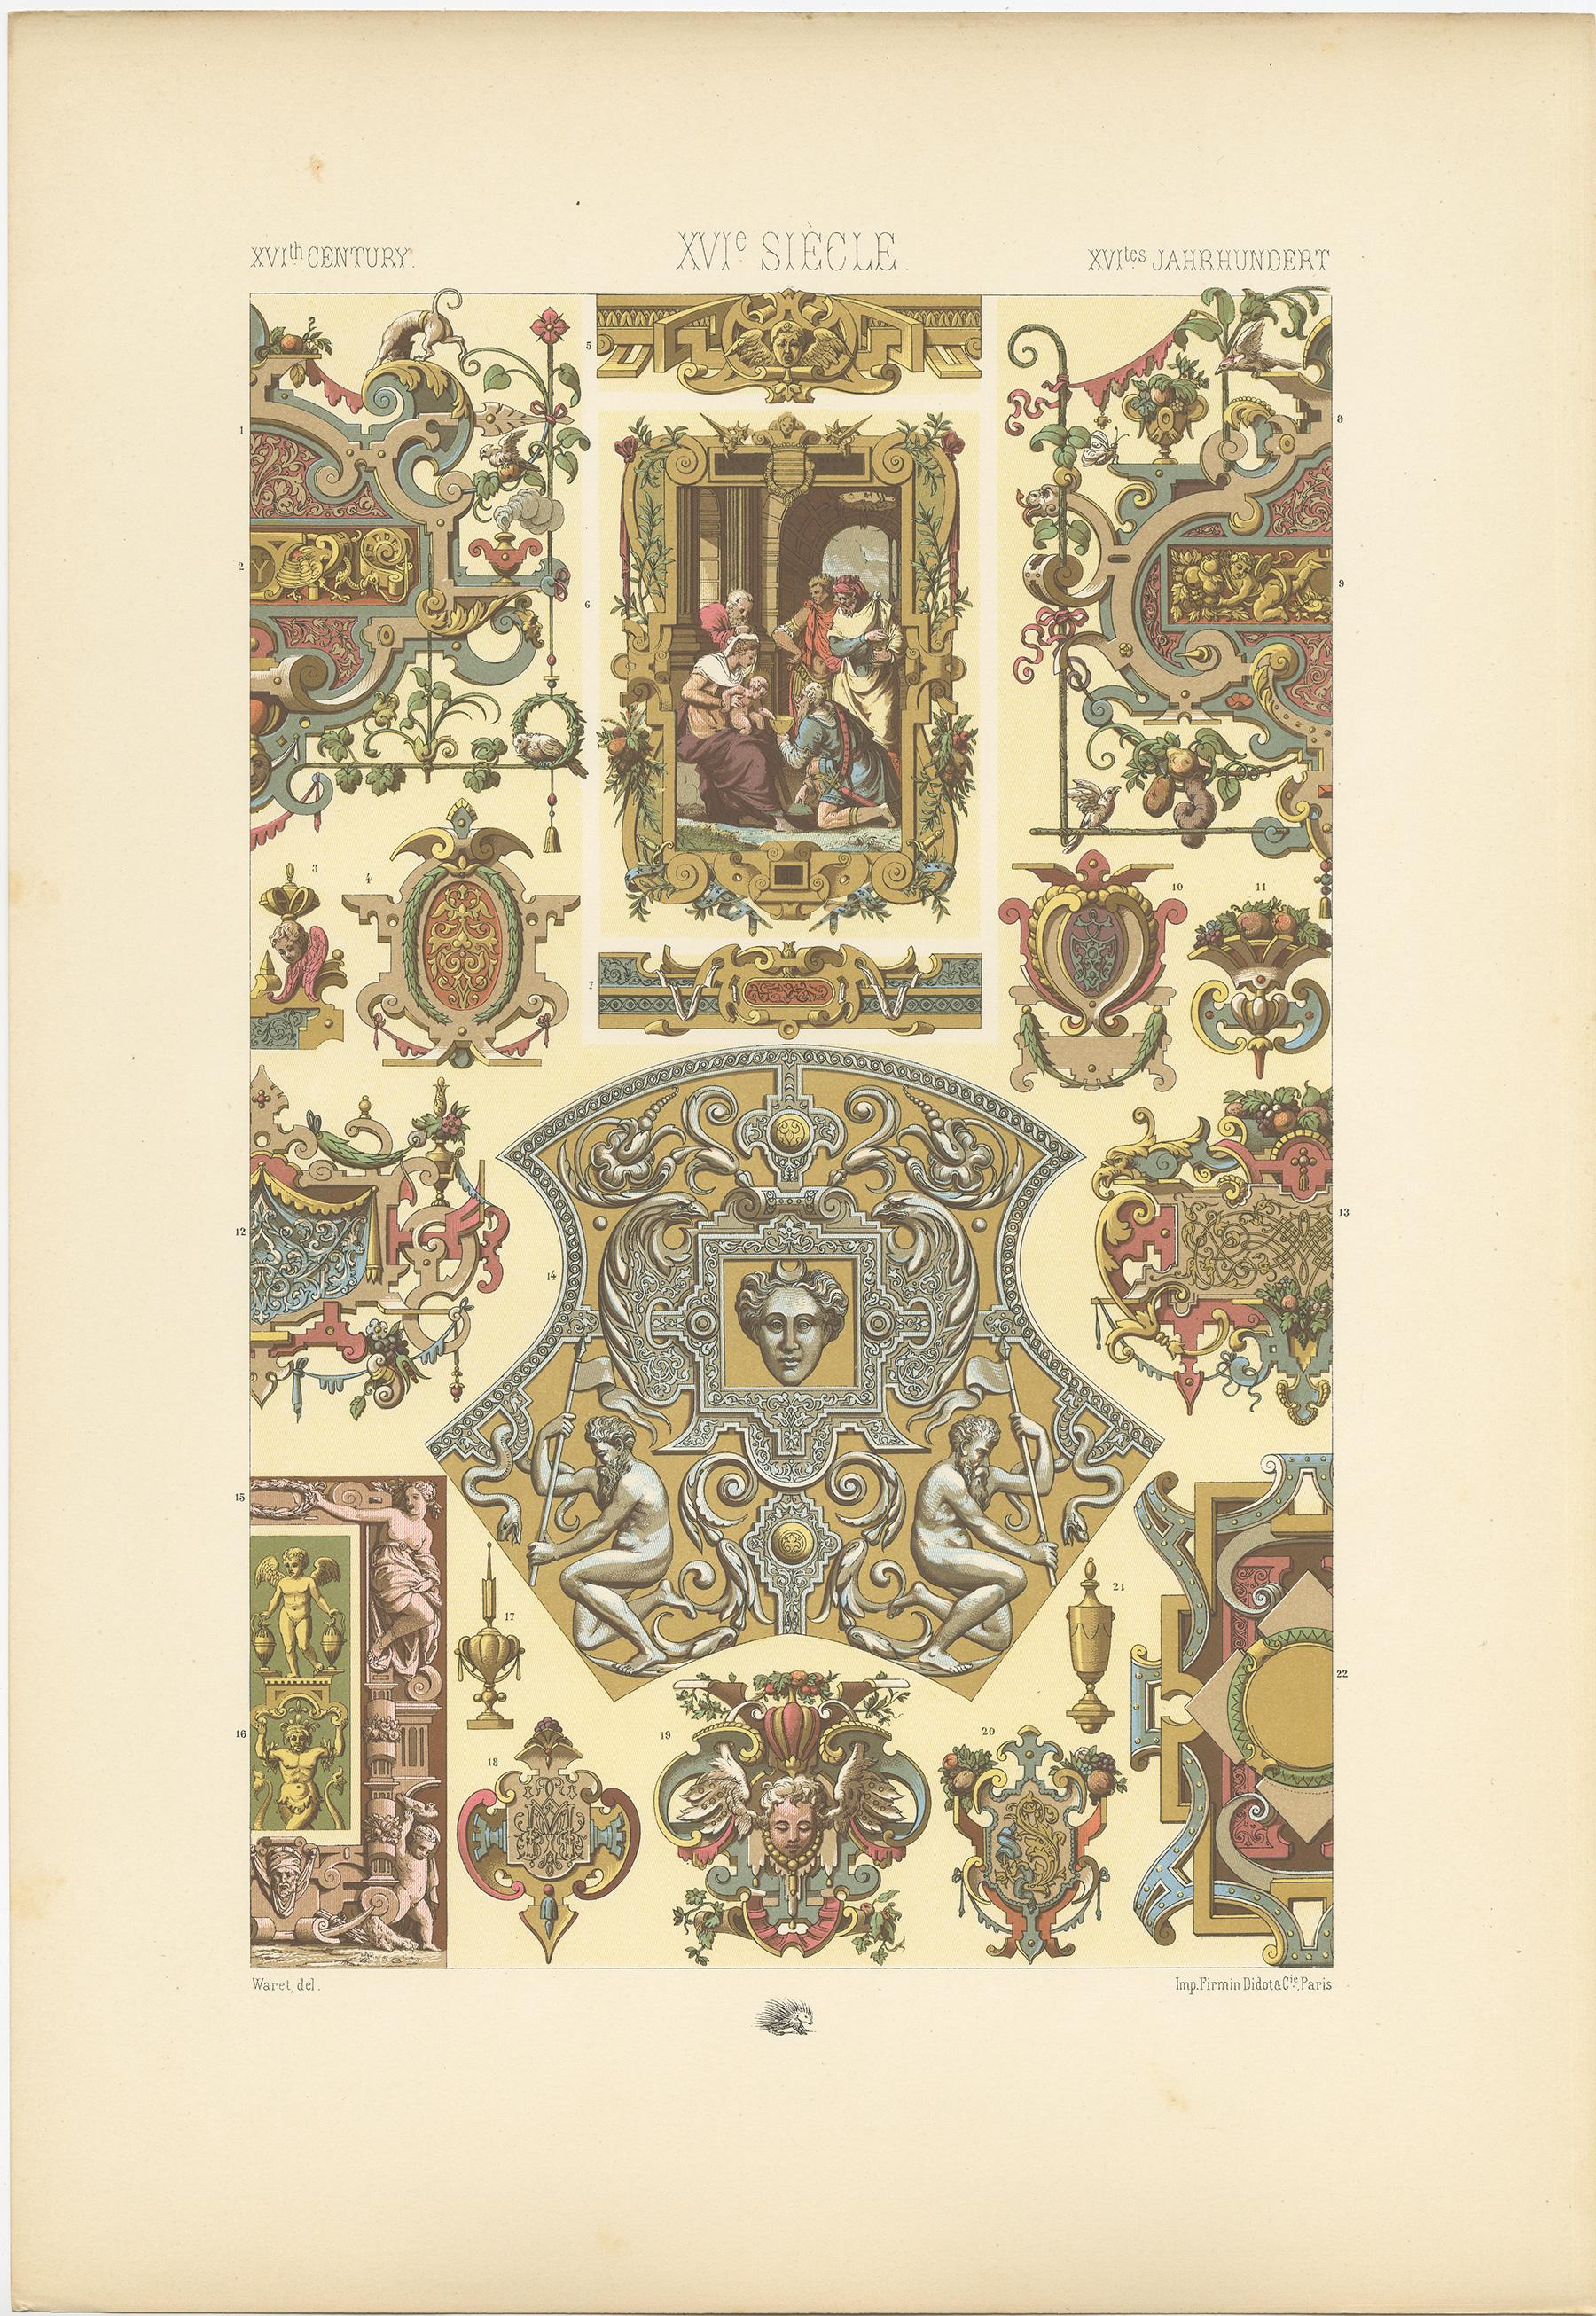 16th century patterns